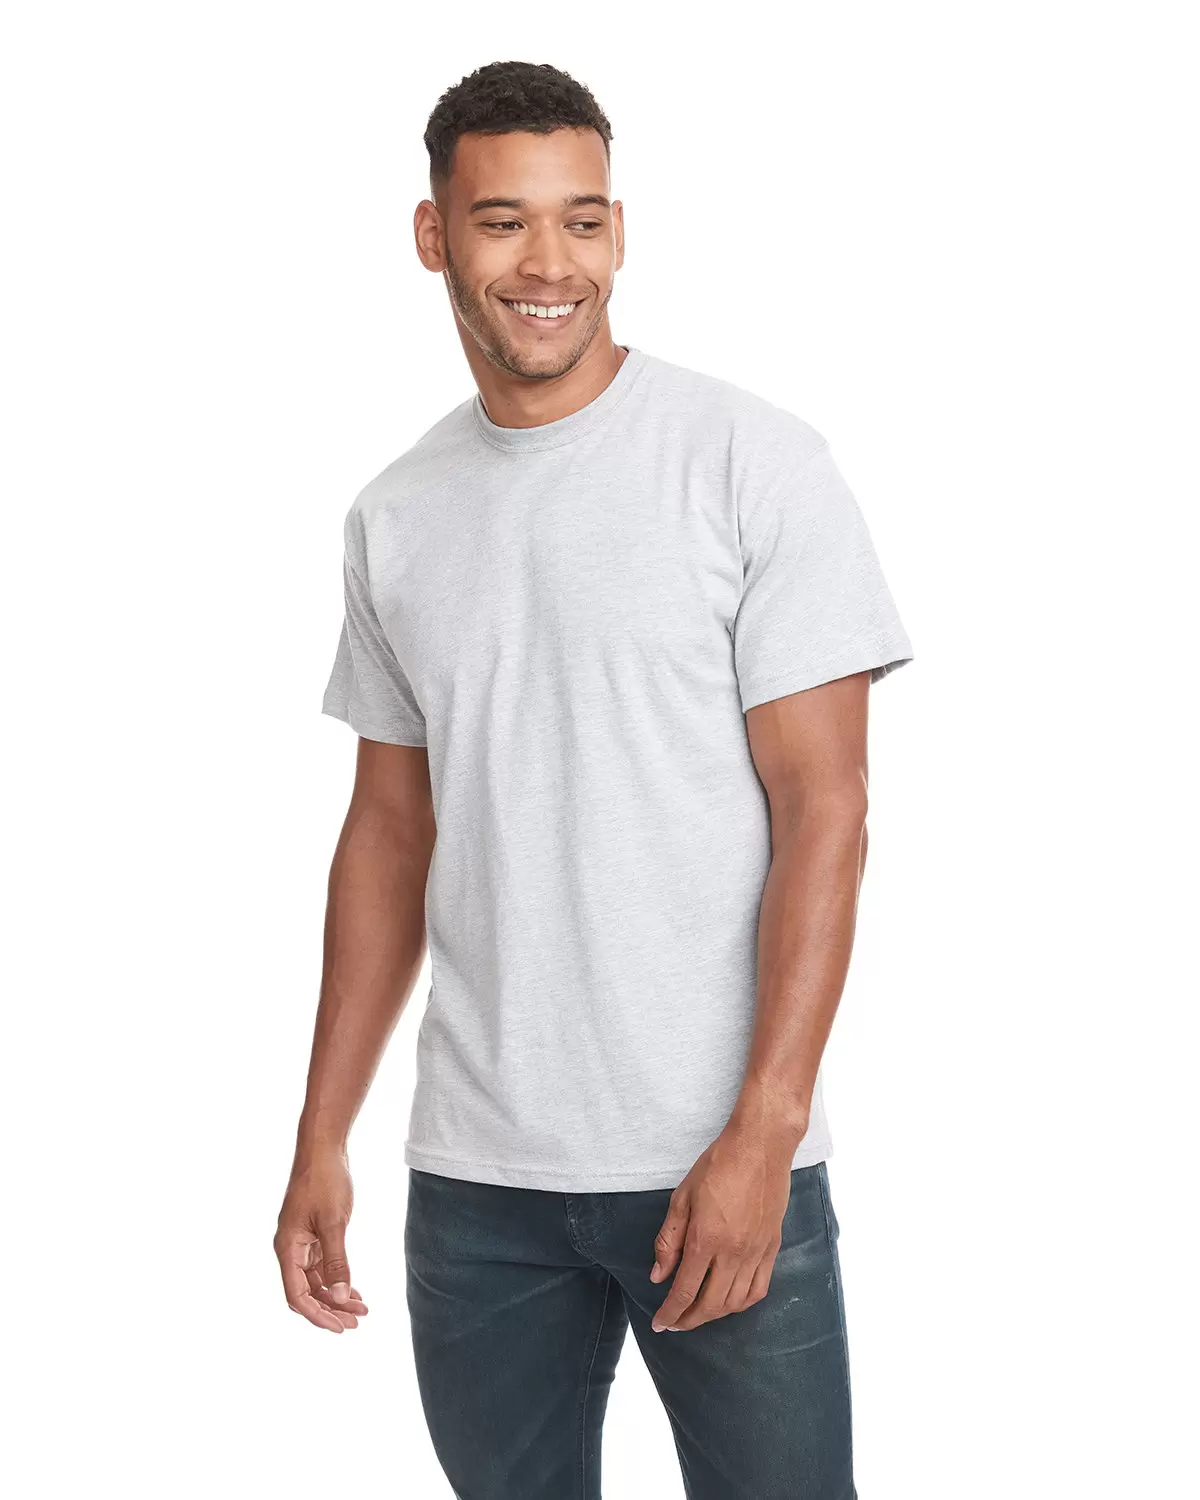 Next Level 3600 T-Shirt Wholesale Premium Cotton | Blankstyle From $4.73